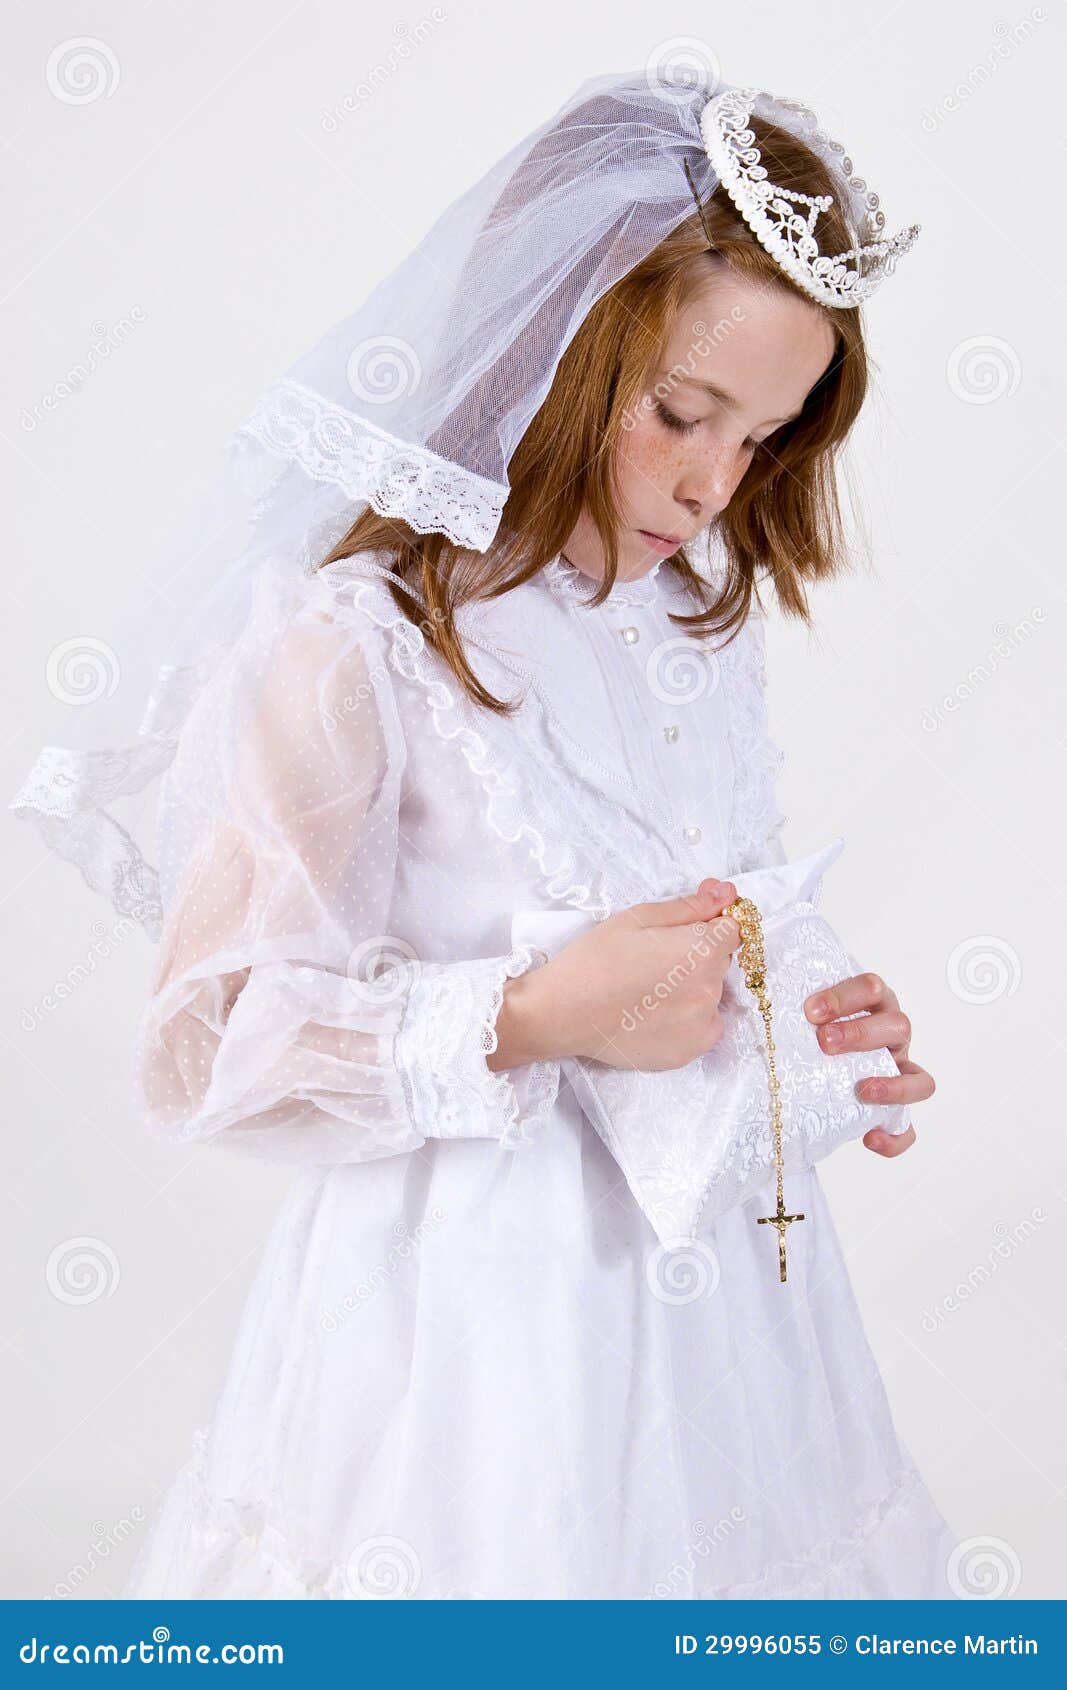 First Communion Purse, Bright White Satin Purse, Flower Girl, Church Purse,  Girls Fashion, Child Accessories, Made in USA - Etsy